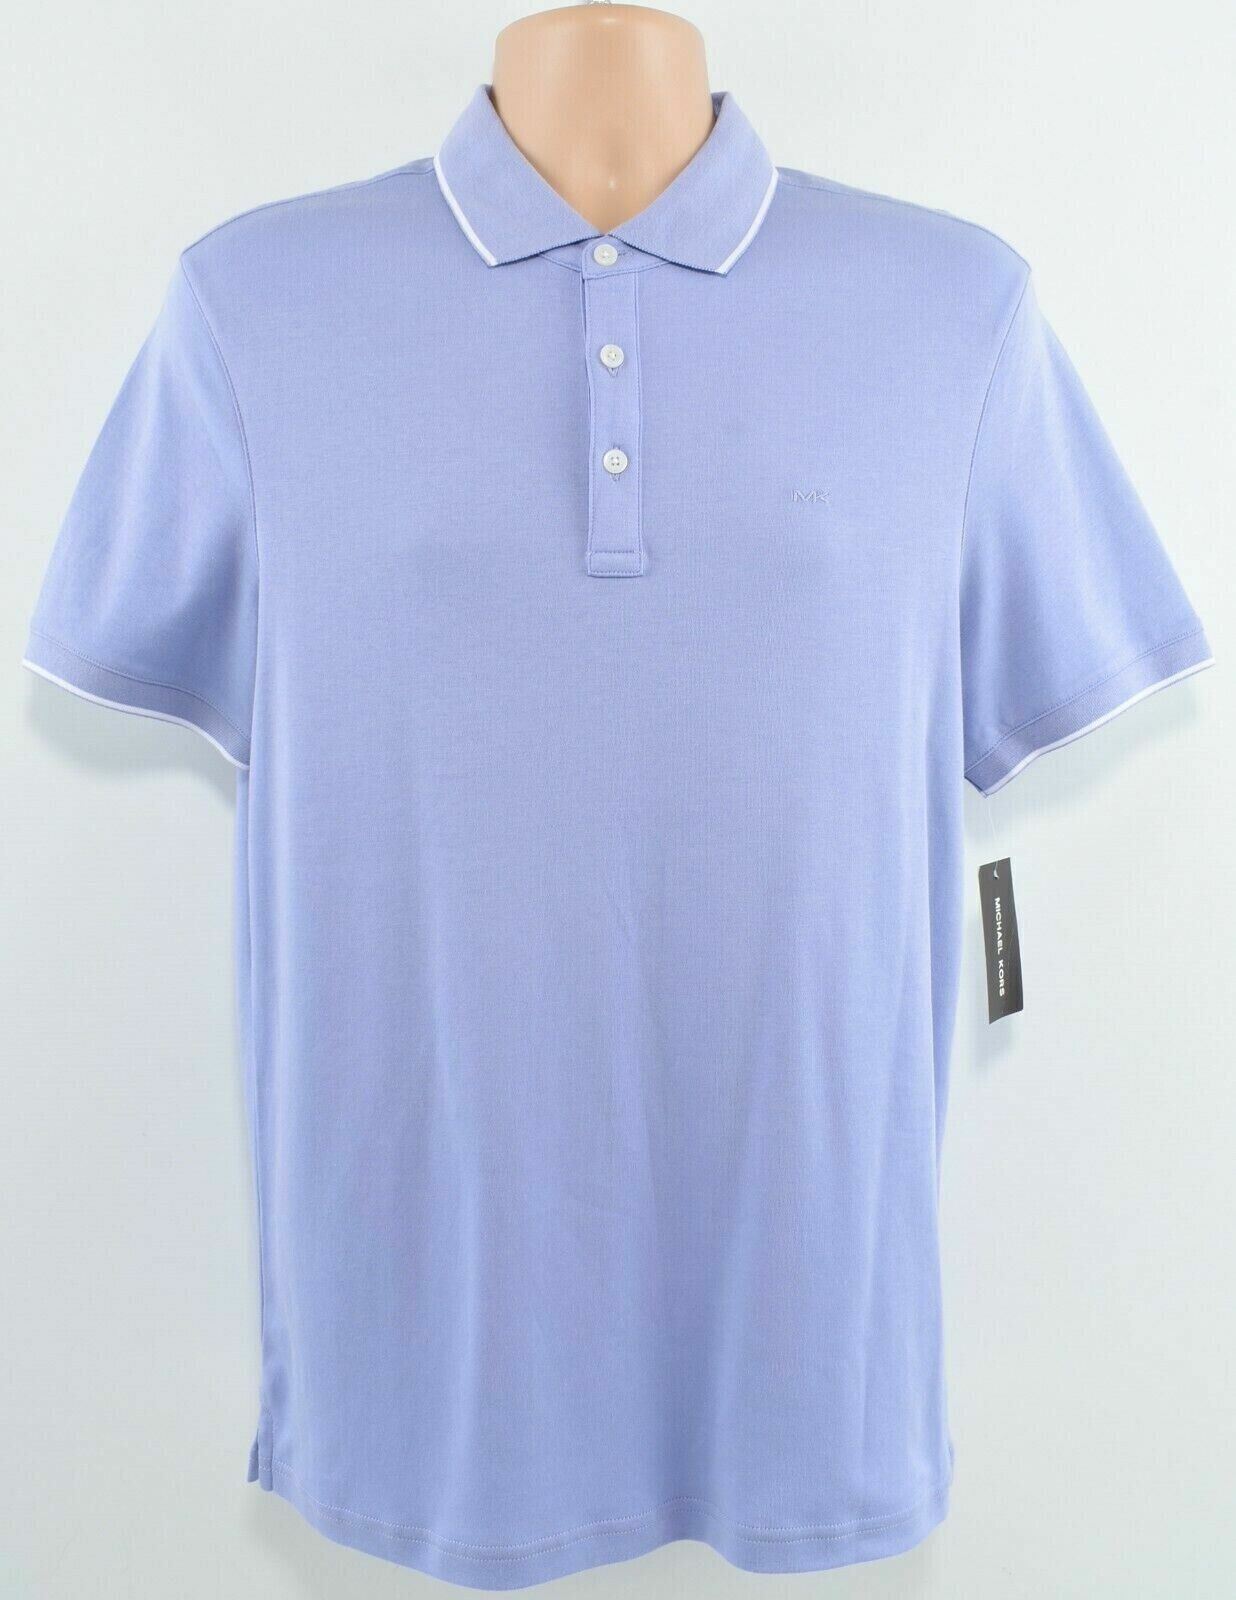 MICHAEL KORS Mens Cotton Jersey Polo Shirt, Thistle Purple, size SMALL